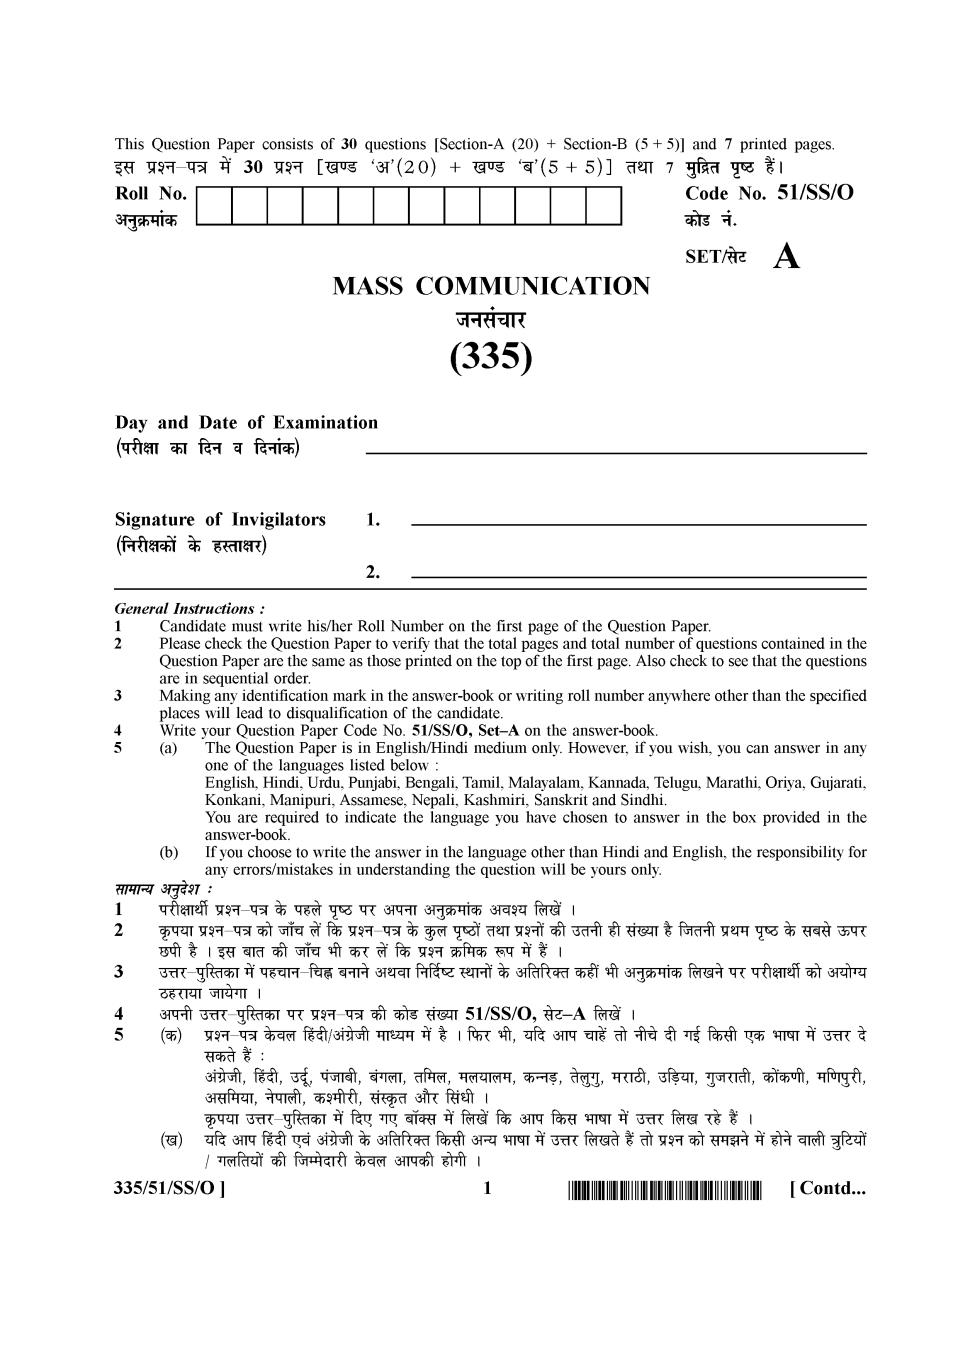 NIOS Class 12 Question Paper Oct 2015 - Mass Communication - Page 1